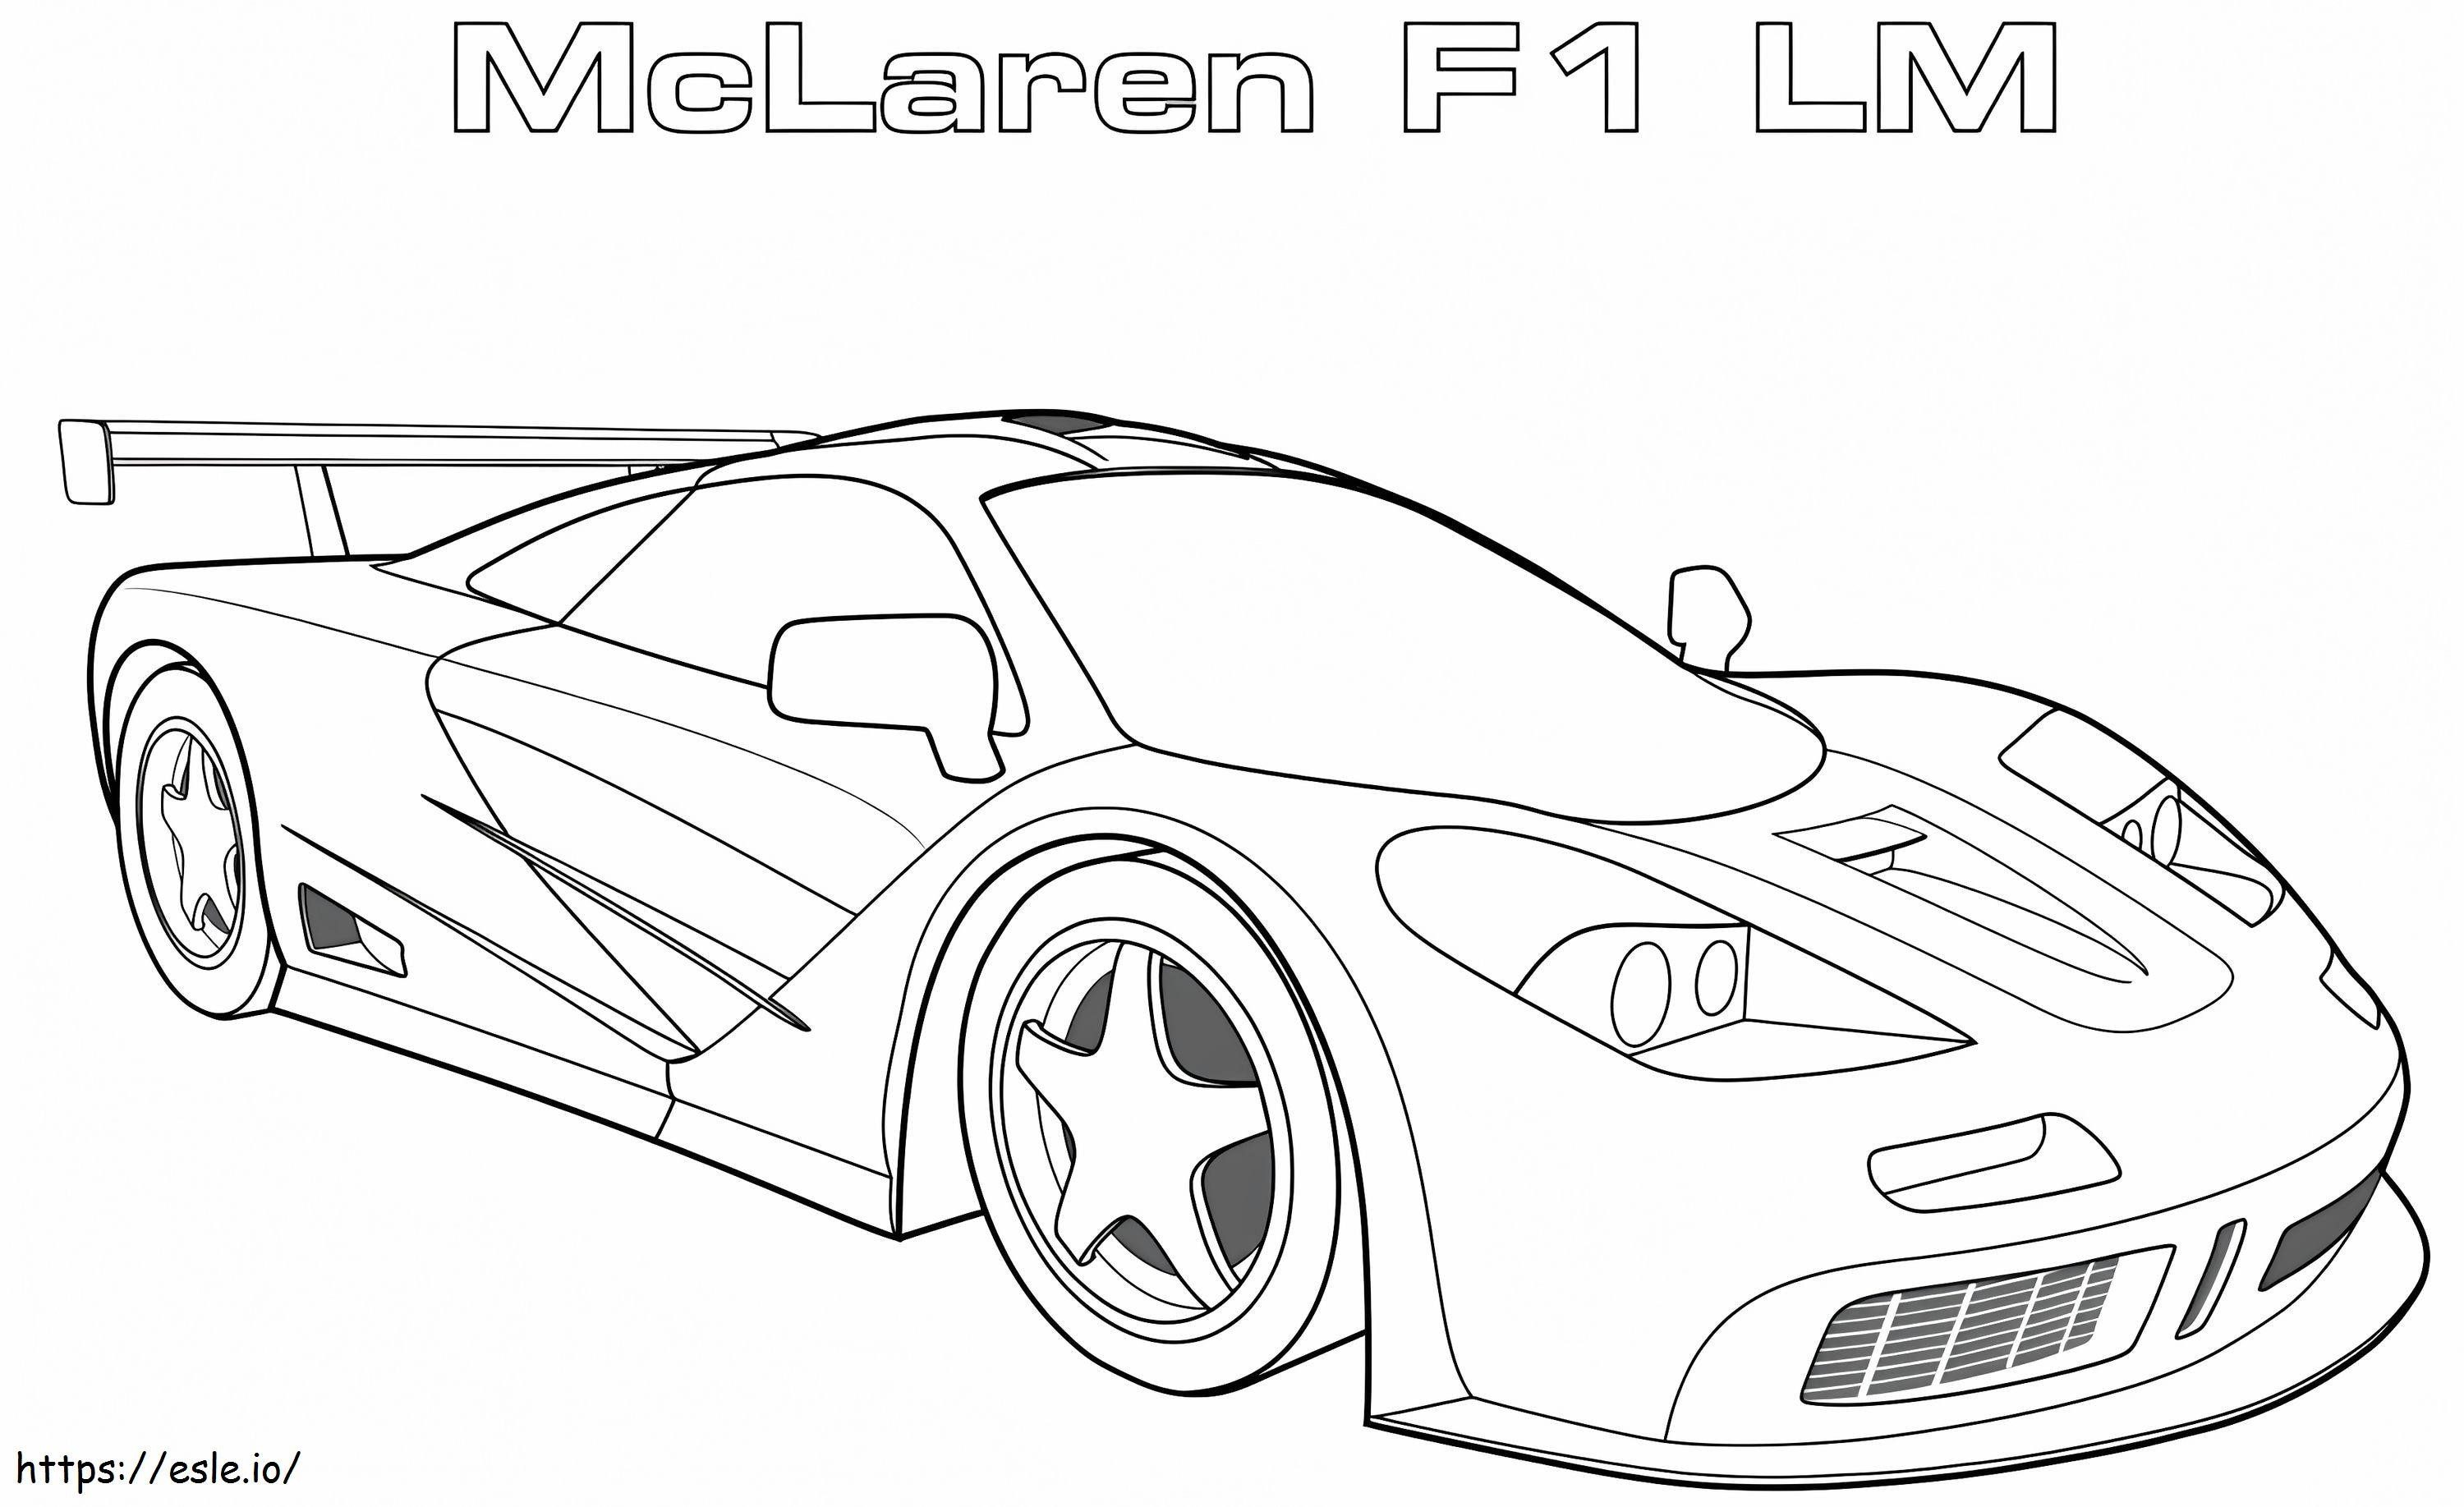  Mclaren F1 Lm A4 kifestő